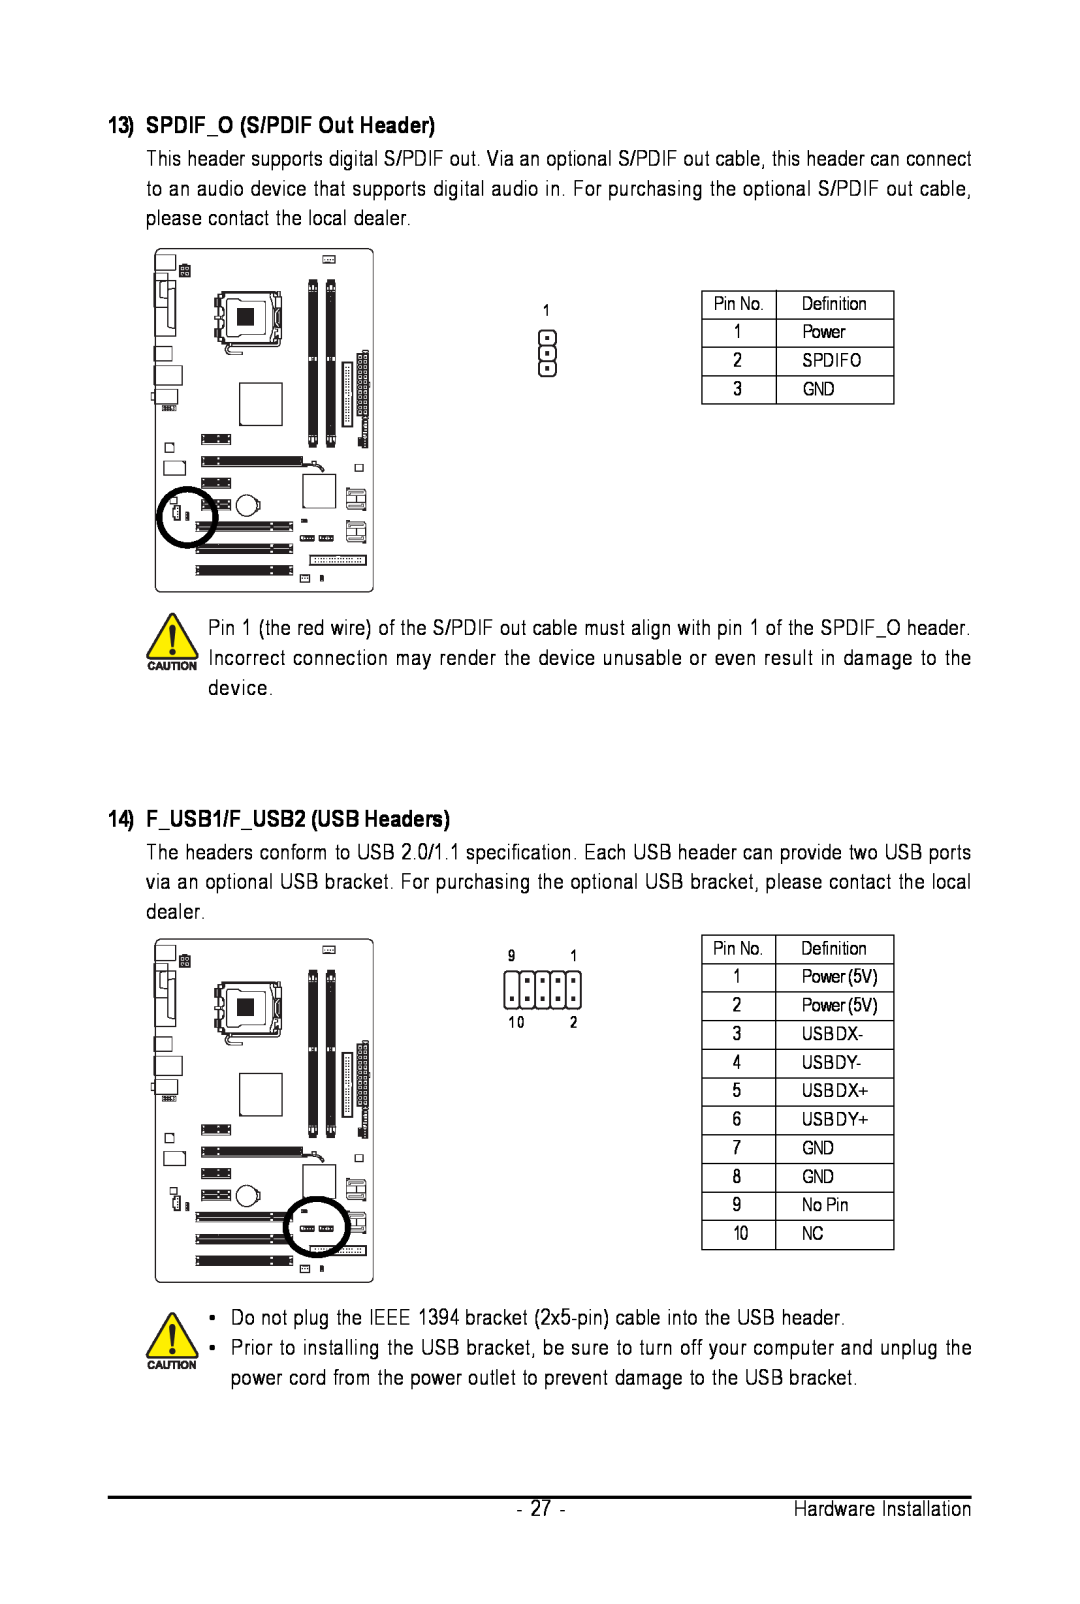 Intel GA-945PL-S3G user manual 13SPDIF O S/PDIF Out Header, 14F_USB1/F_USB2 USB Headers 